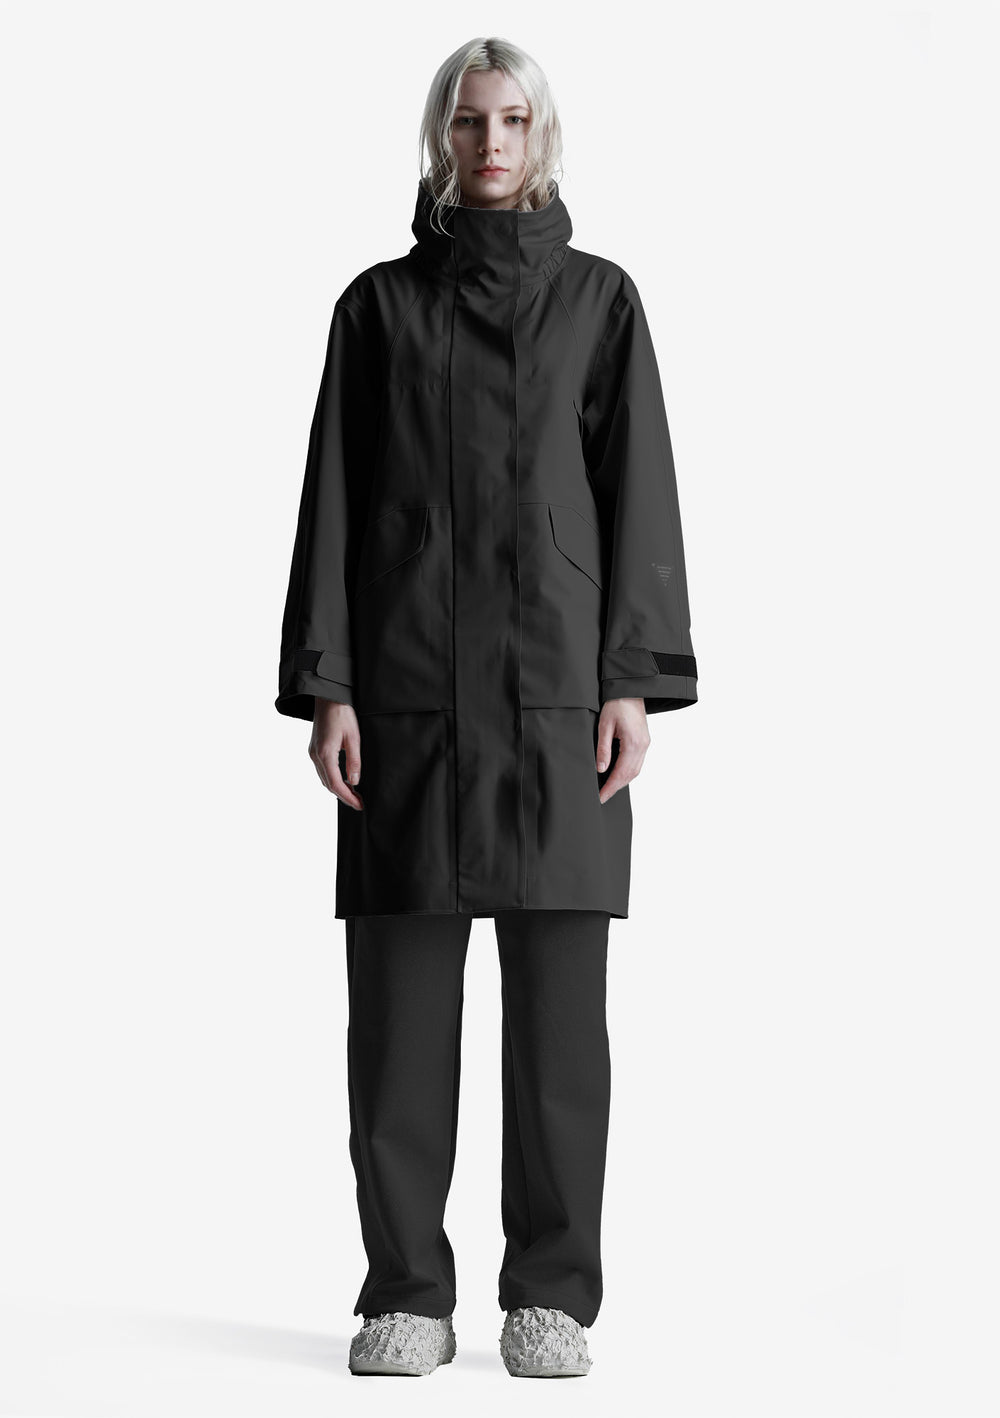 MISHIMA Stand-up Collar Waterproof Raincoat Qw455-1